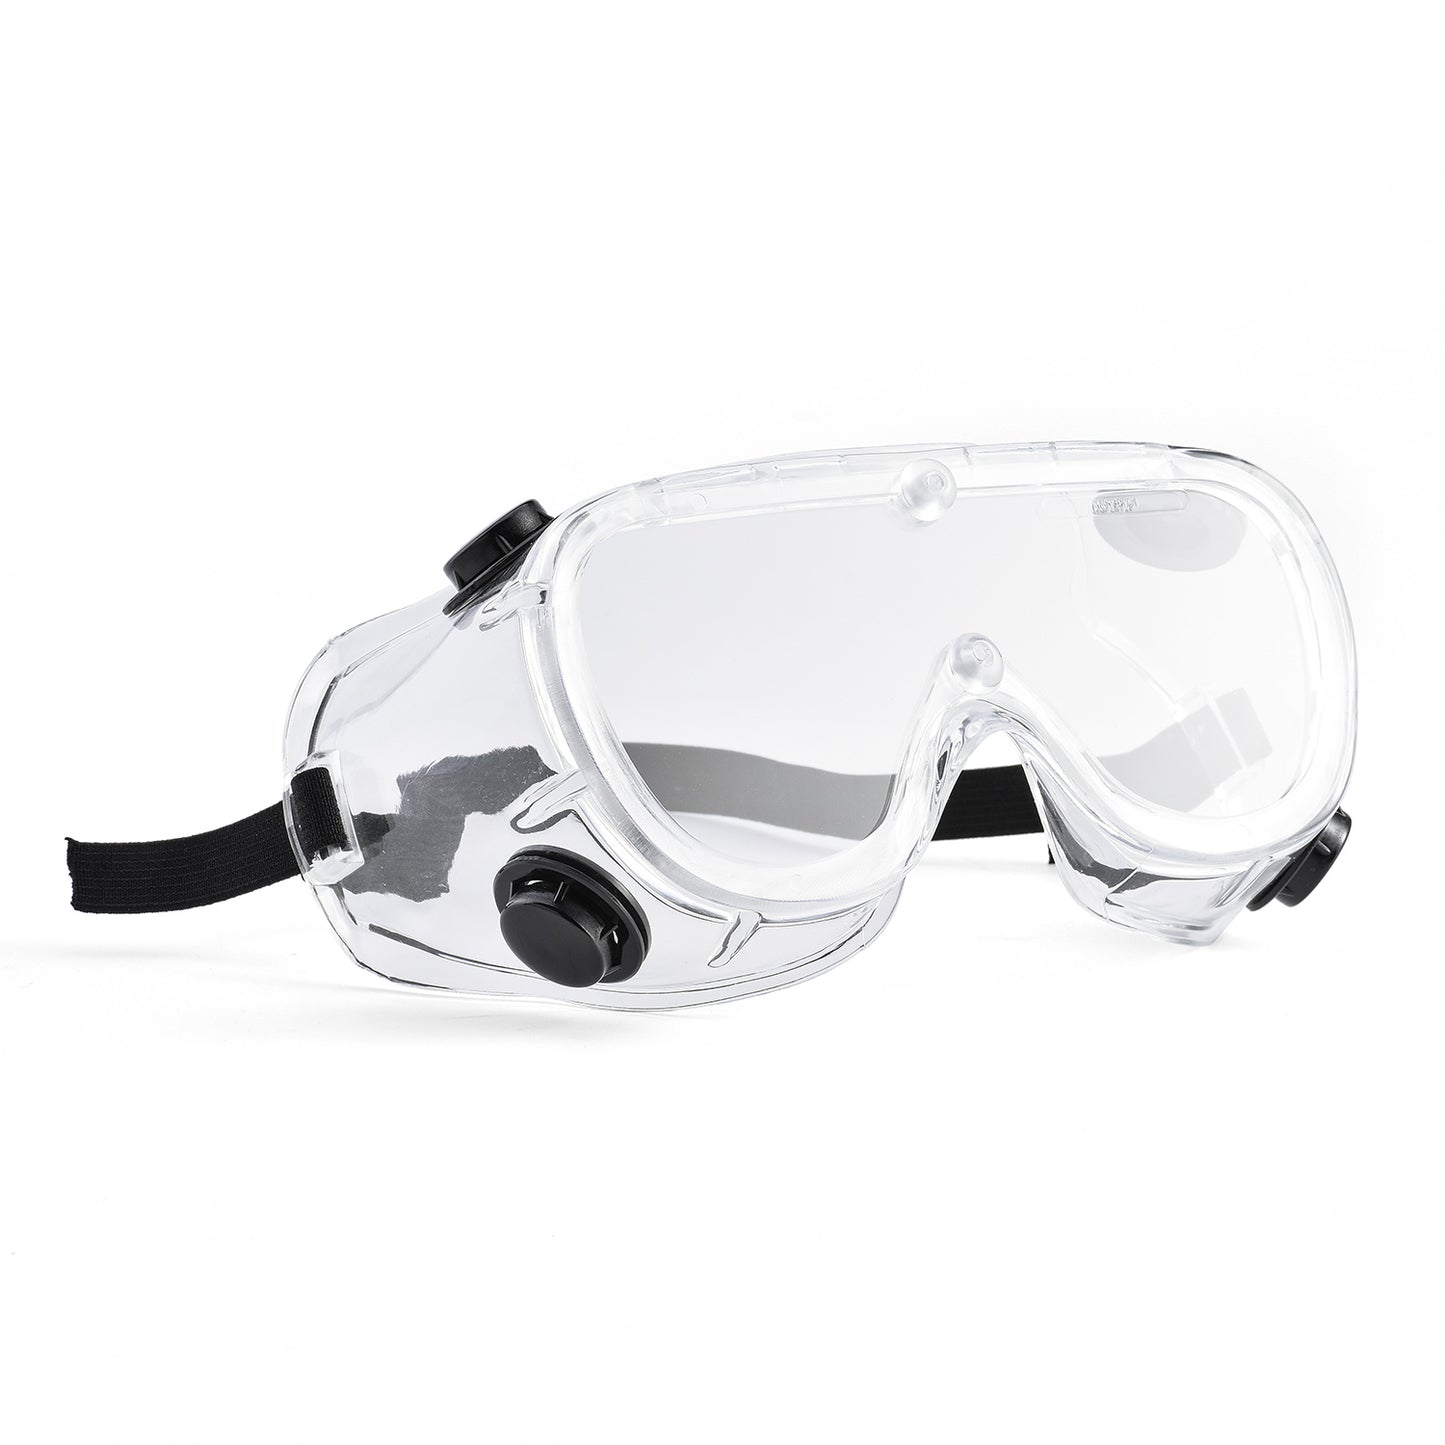 SAFEYEAR Goggles Anti Fog Safety Work Glasses【ANSI Z87.1】Anti Scratch HD Lens UV400 Protection